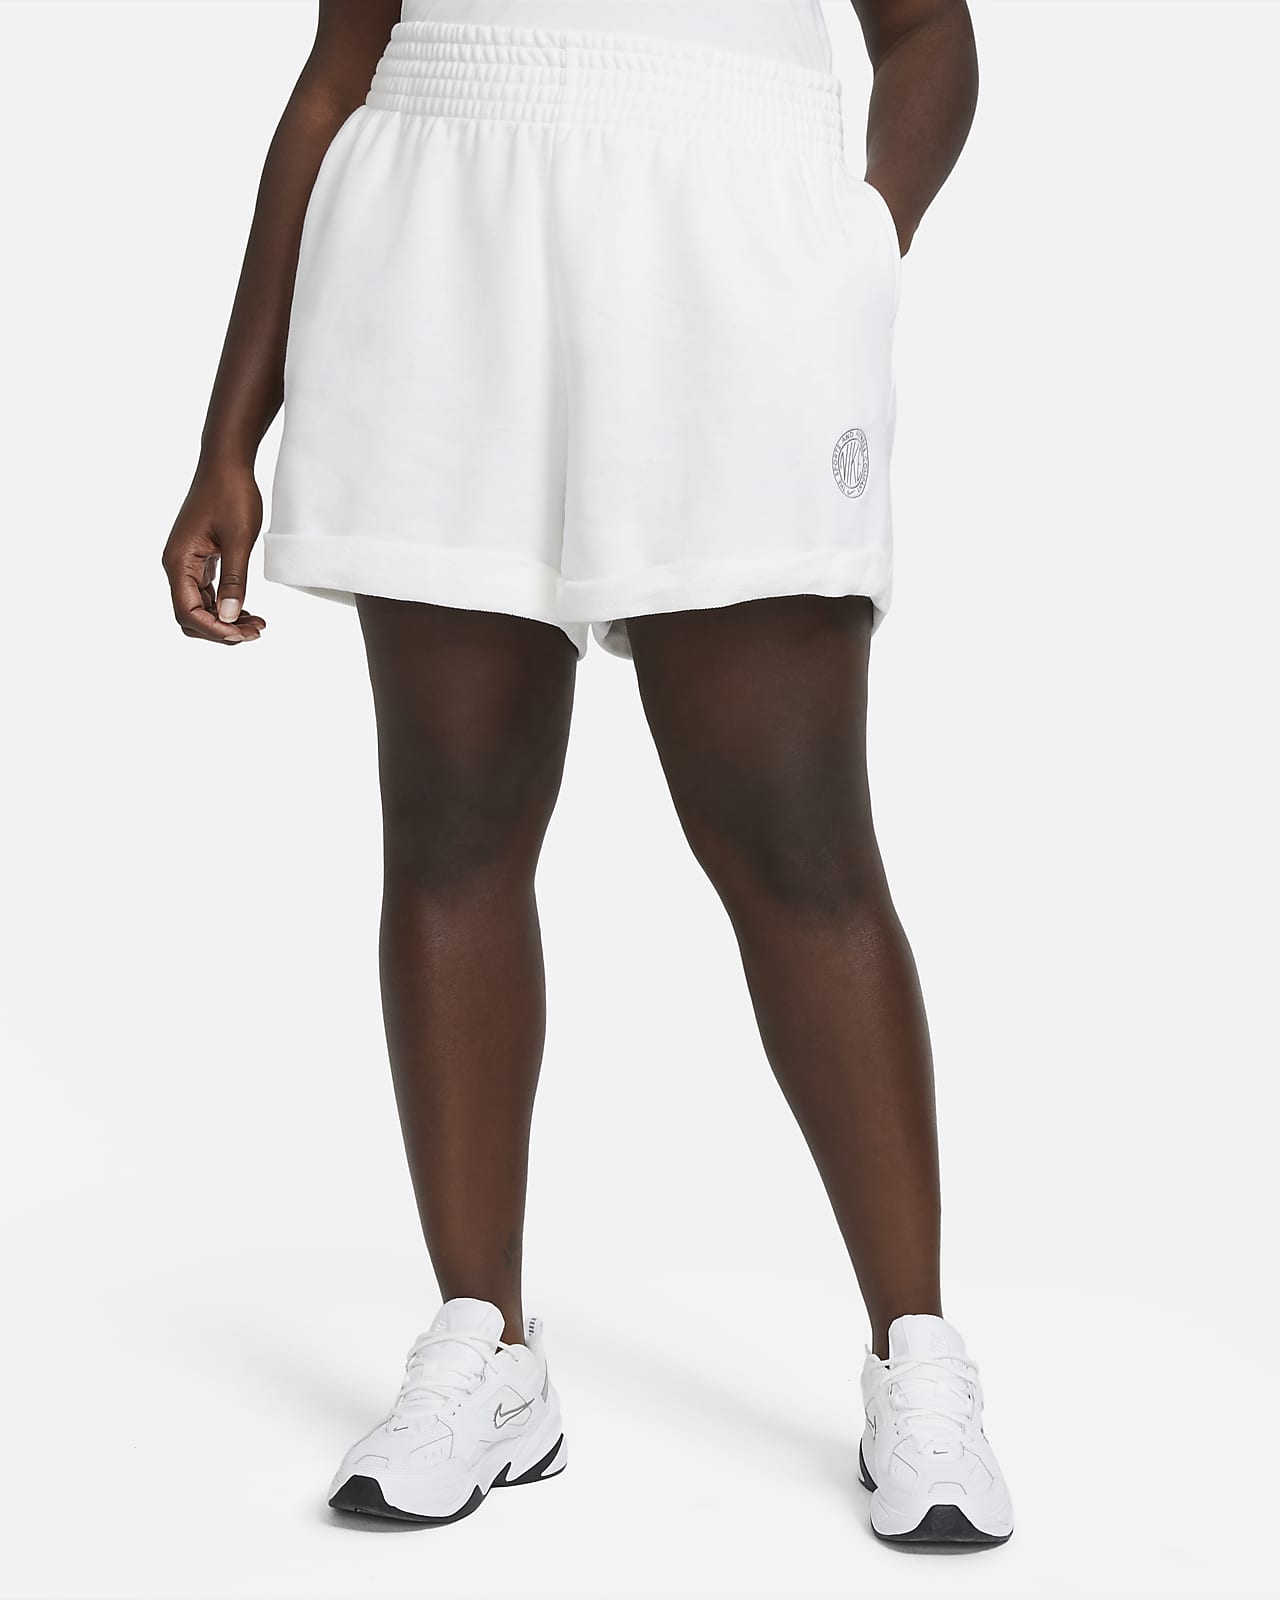 nike plus size tennis clothes